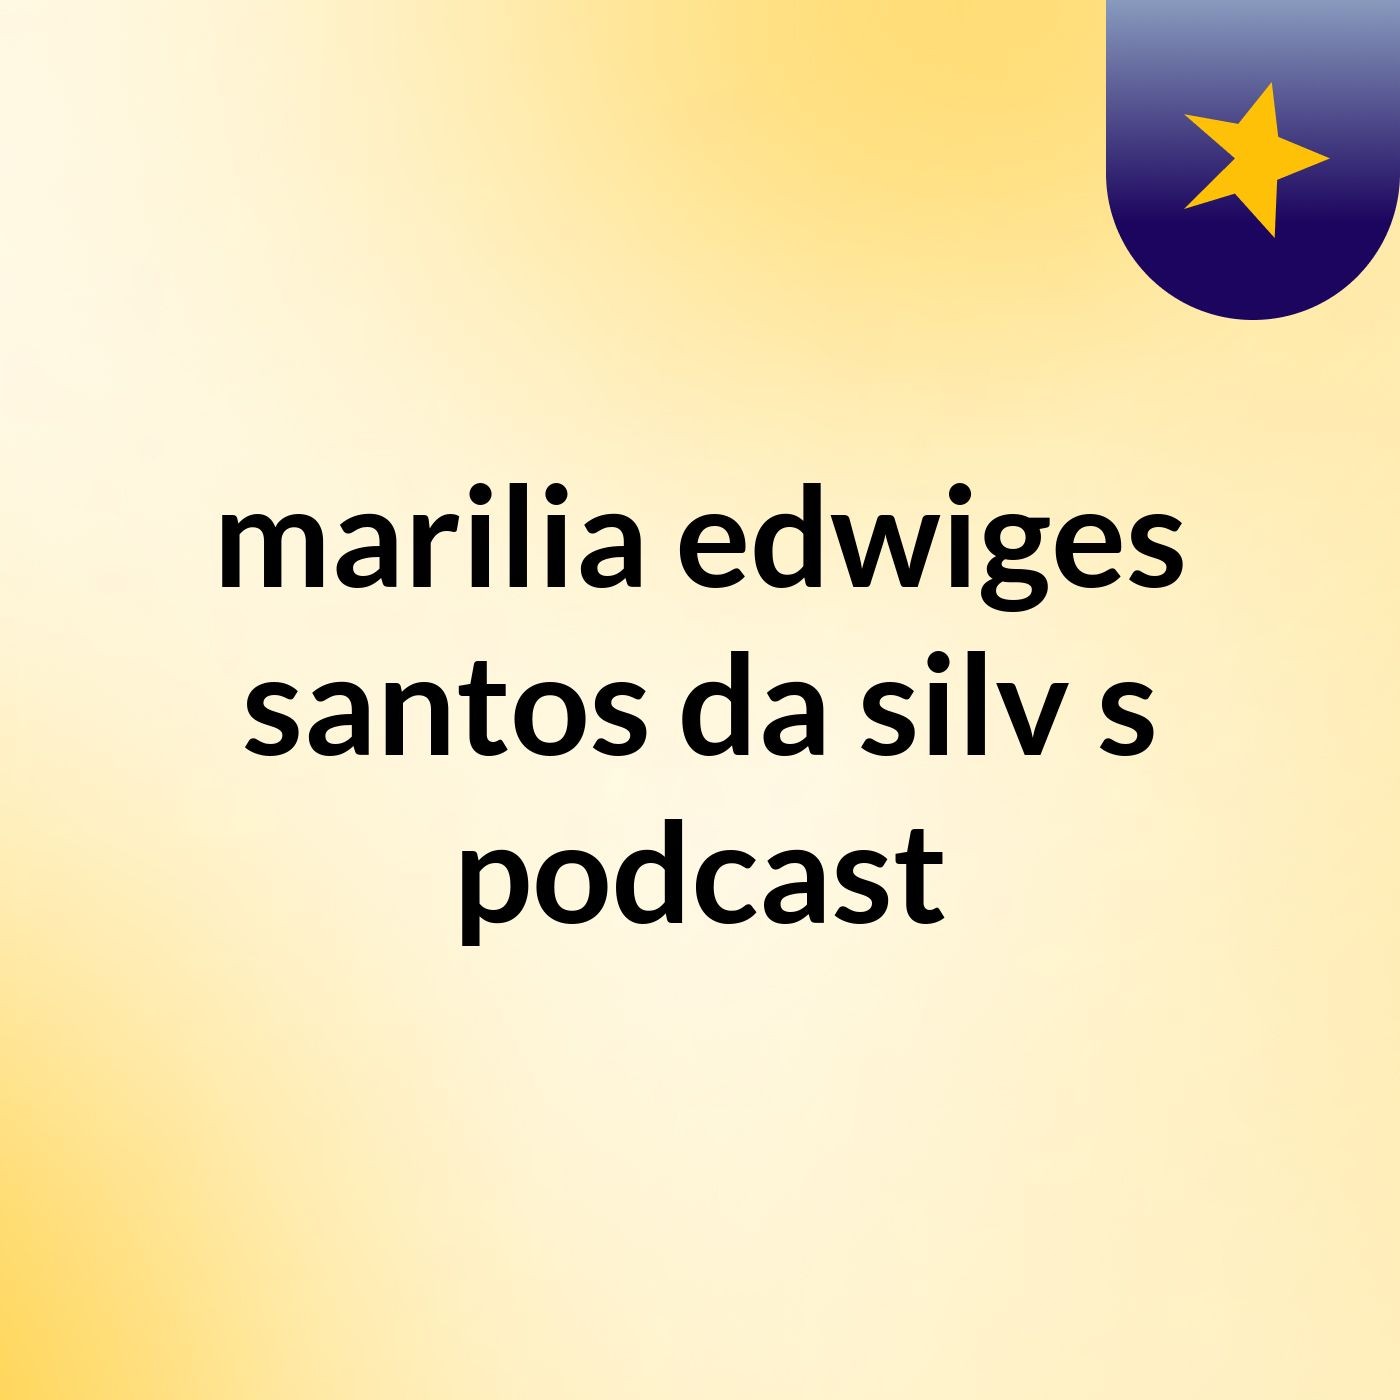 marilia edwiges santos da silv's podcast